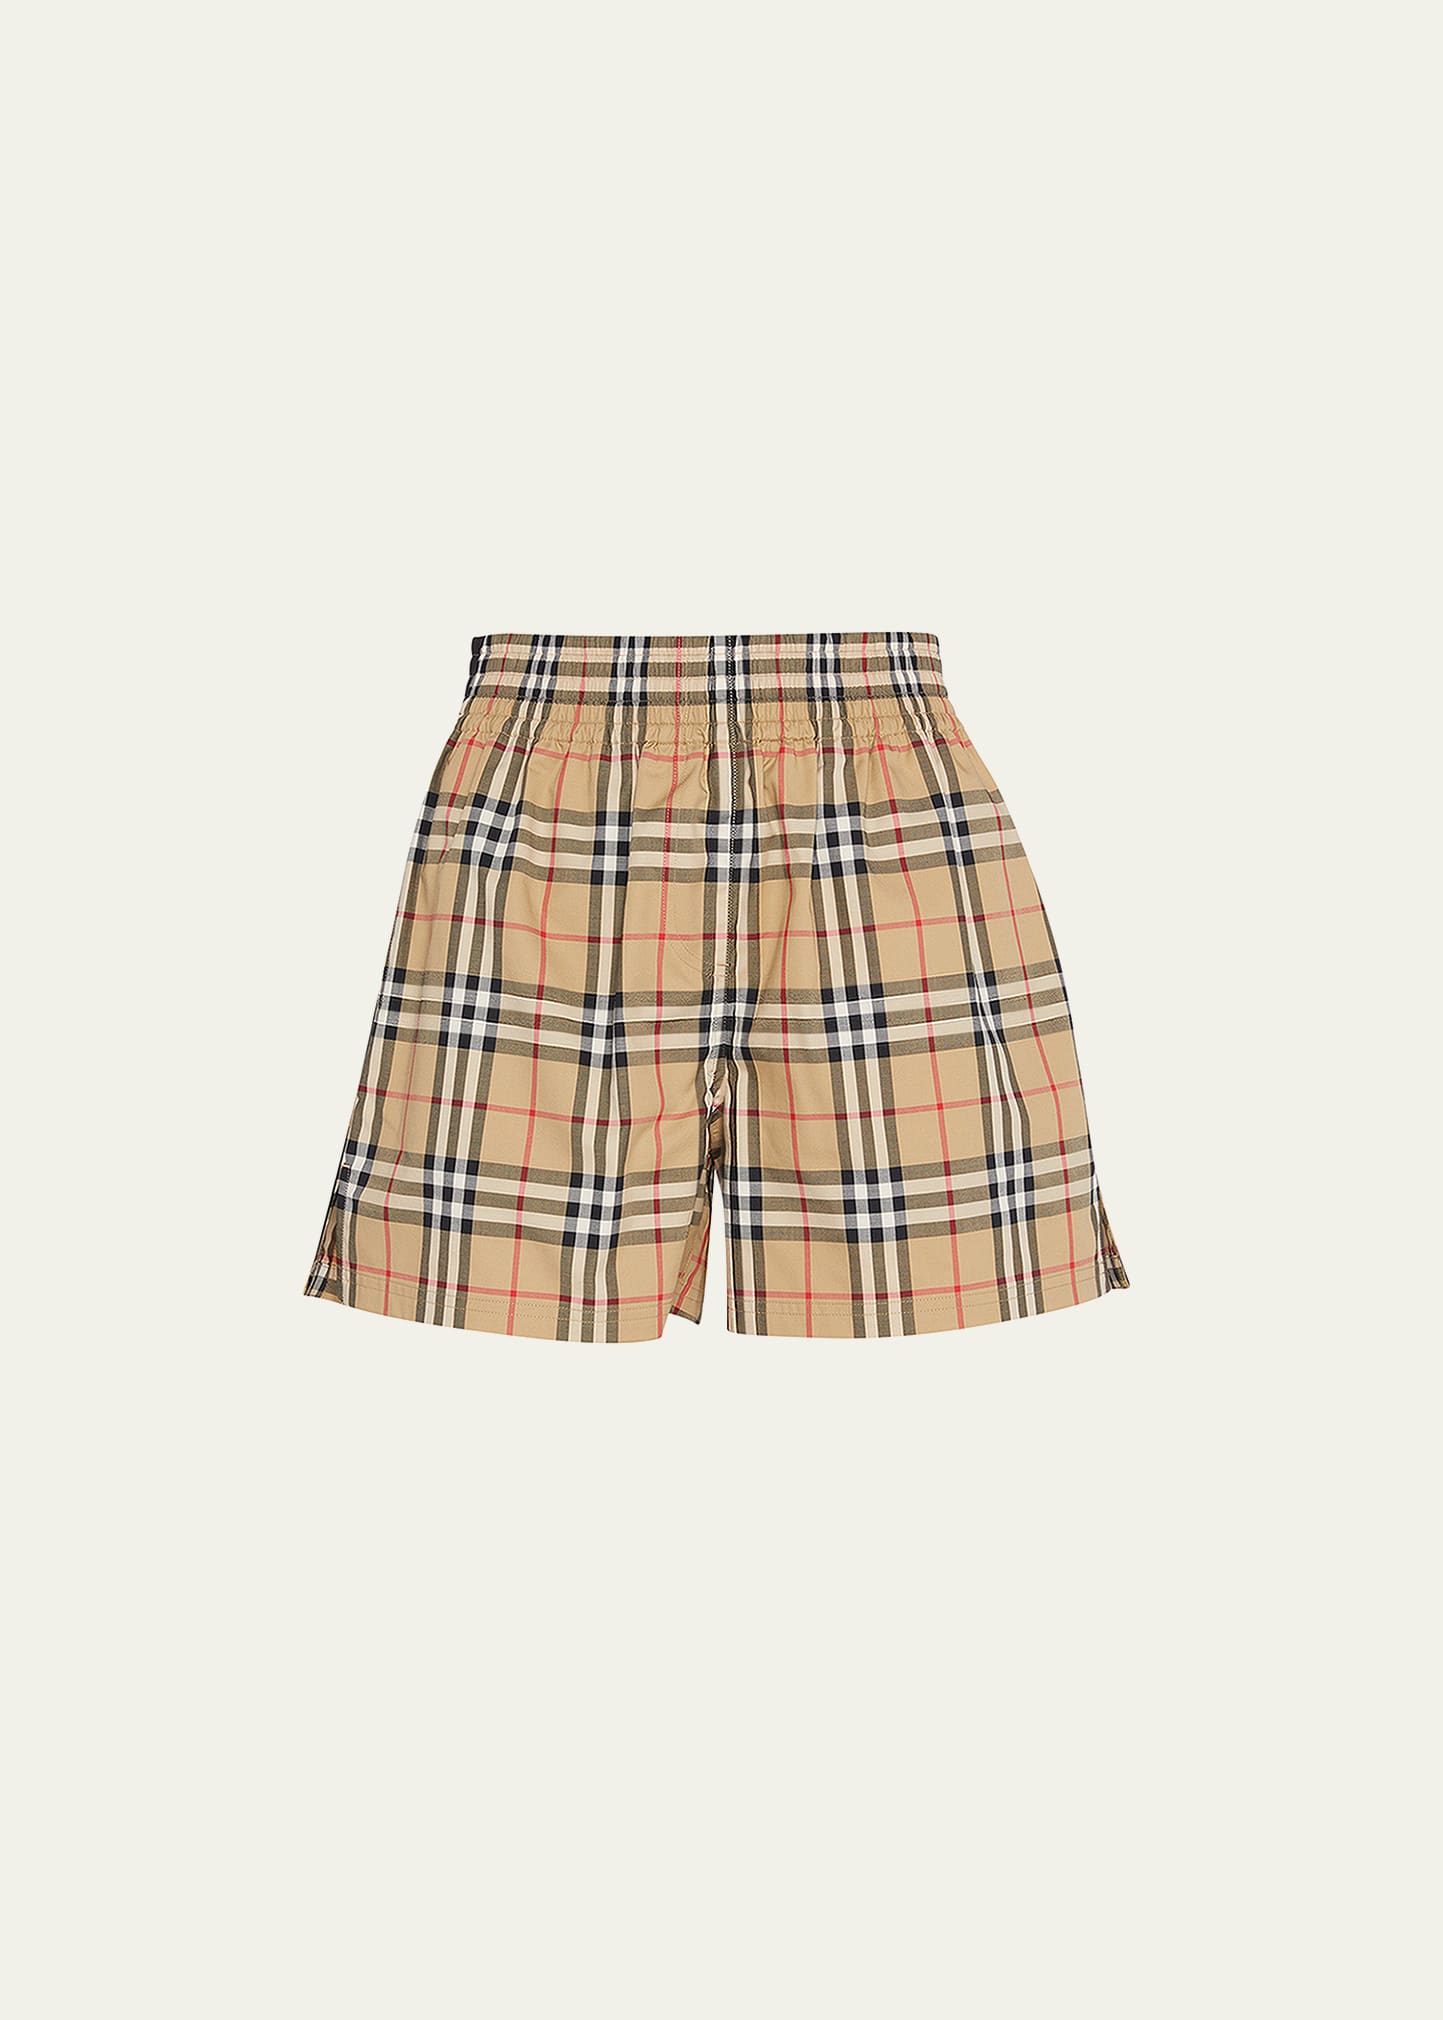 Audrey Side-Stripes Check Shorts